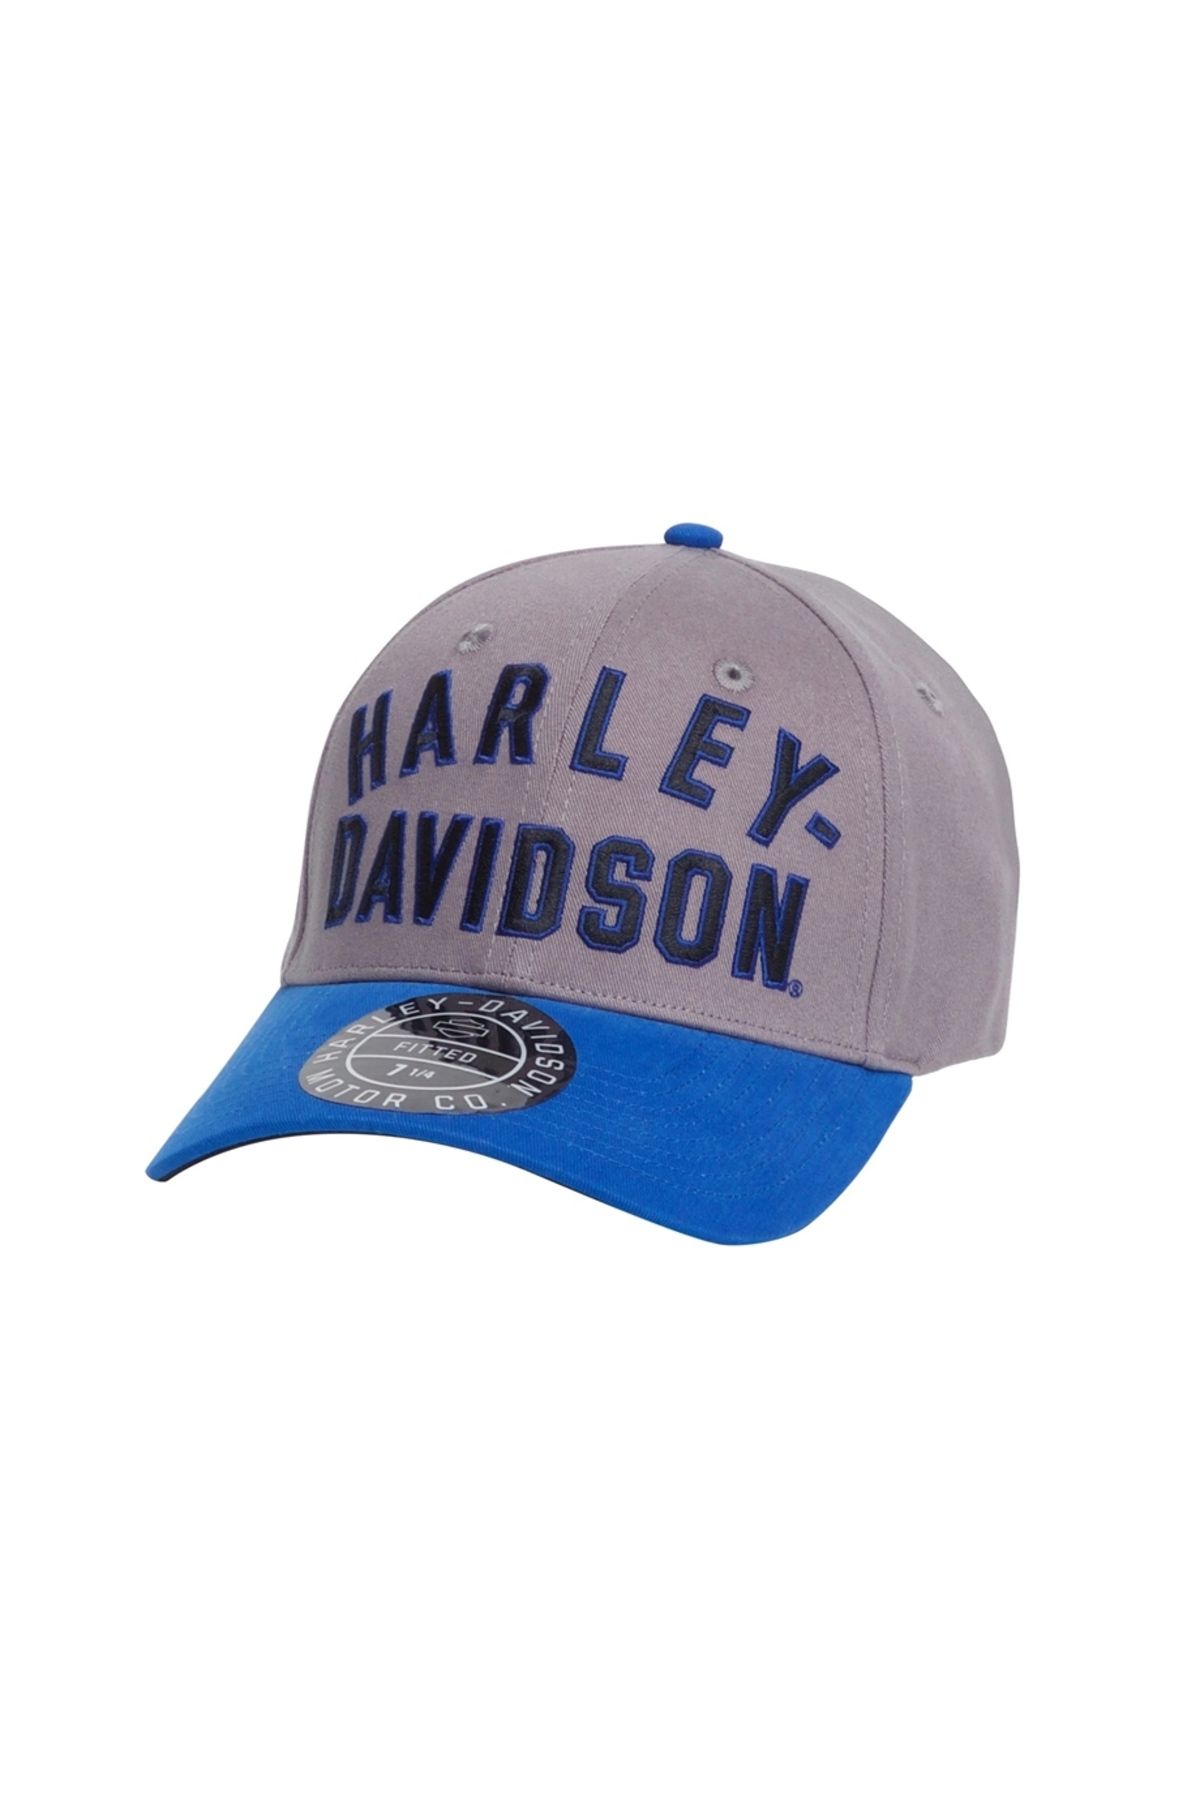 Harley Davidson Harley-davidson Men's Staple Stretch-fit Cap